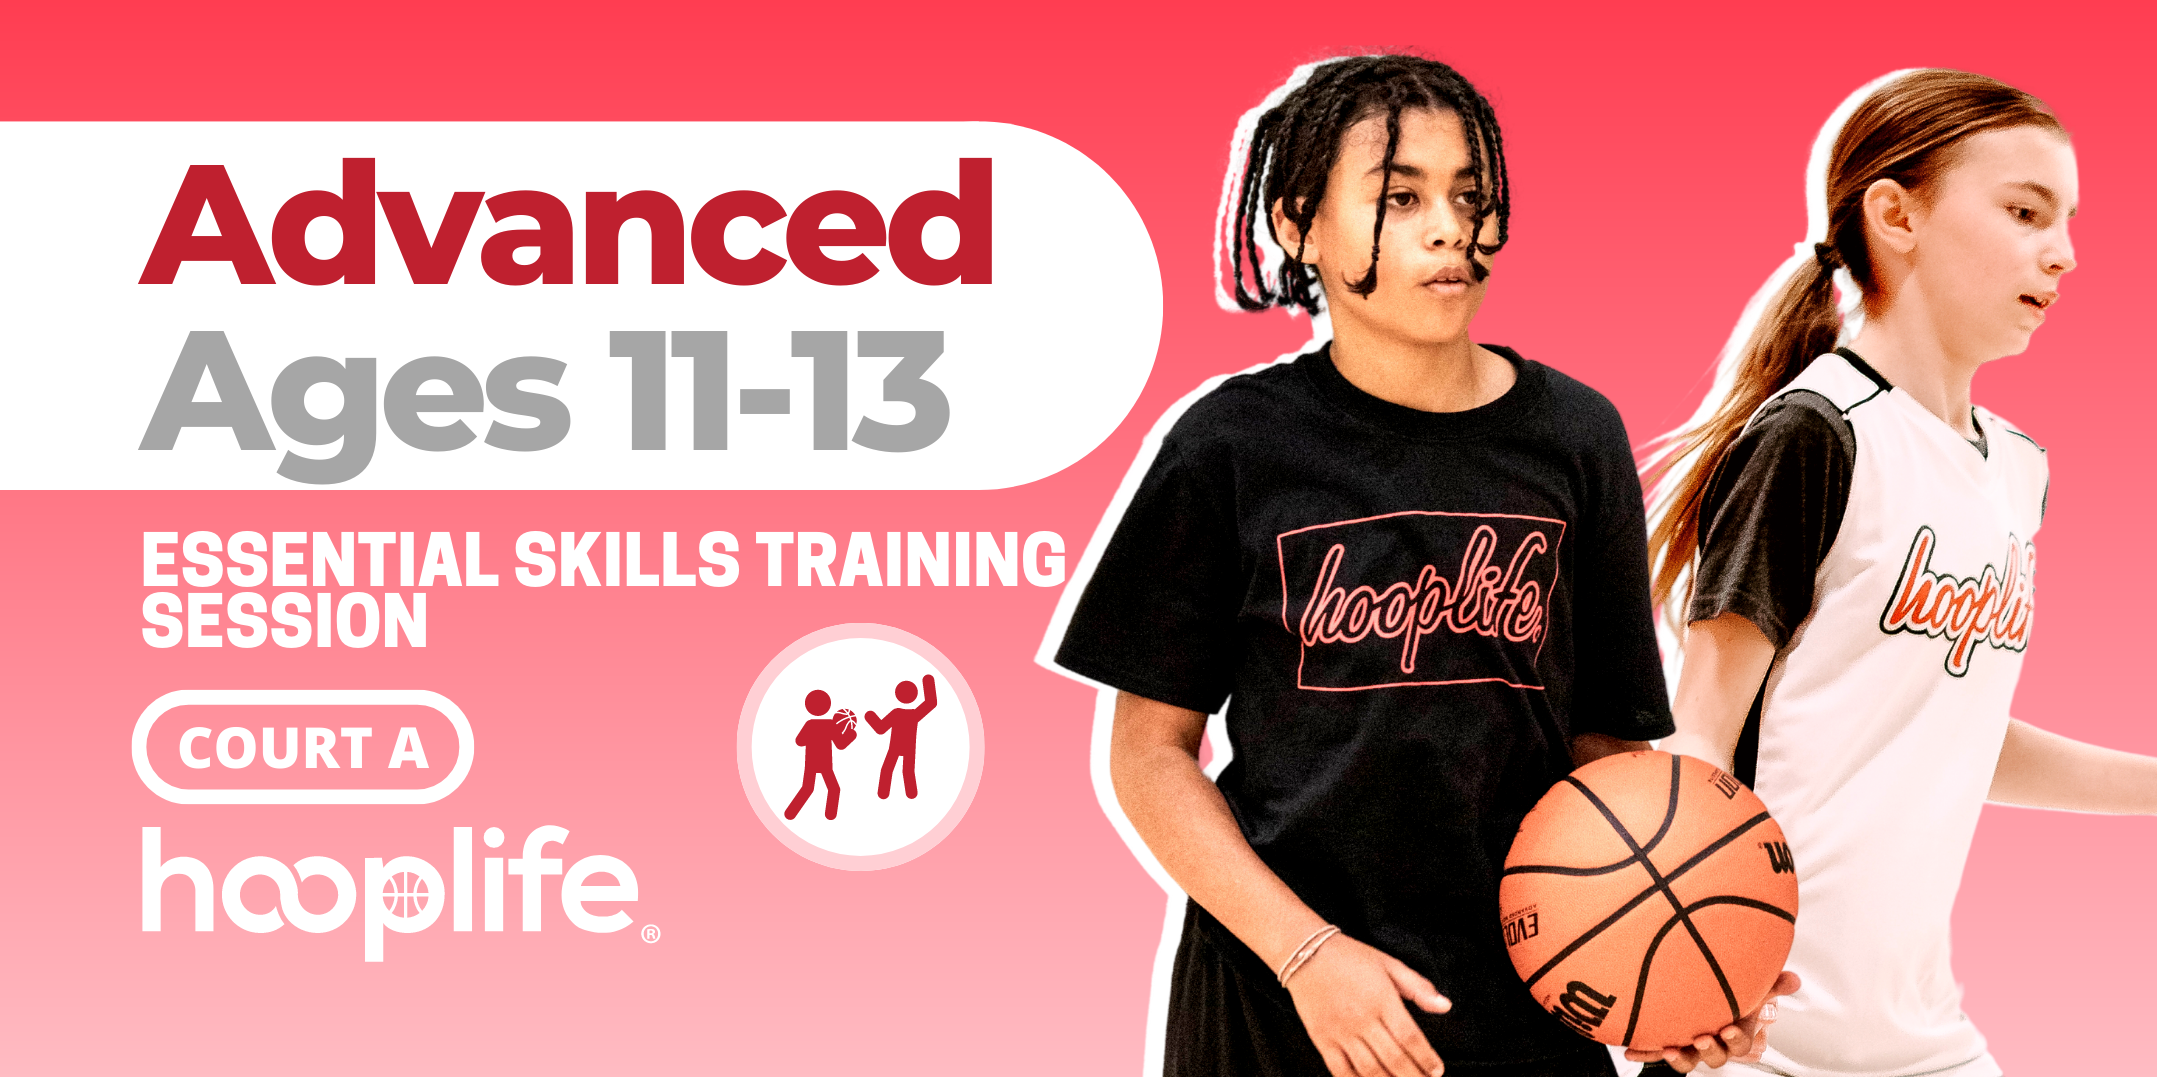 Ages 11-13 Advanced Essential Skills Training Session